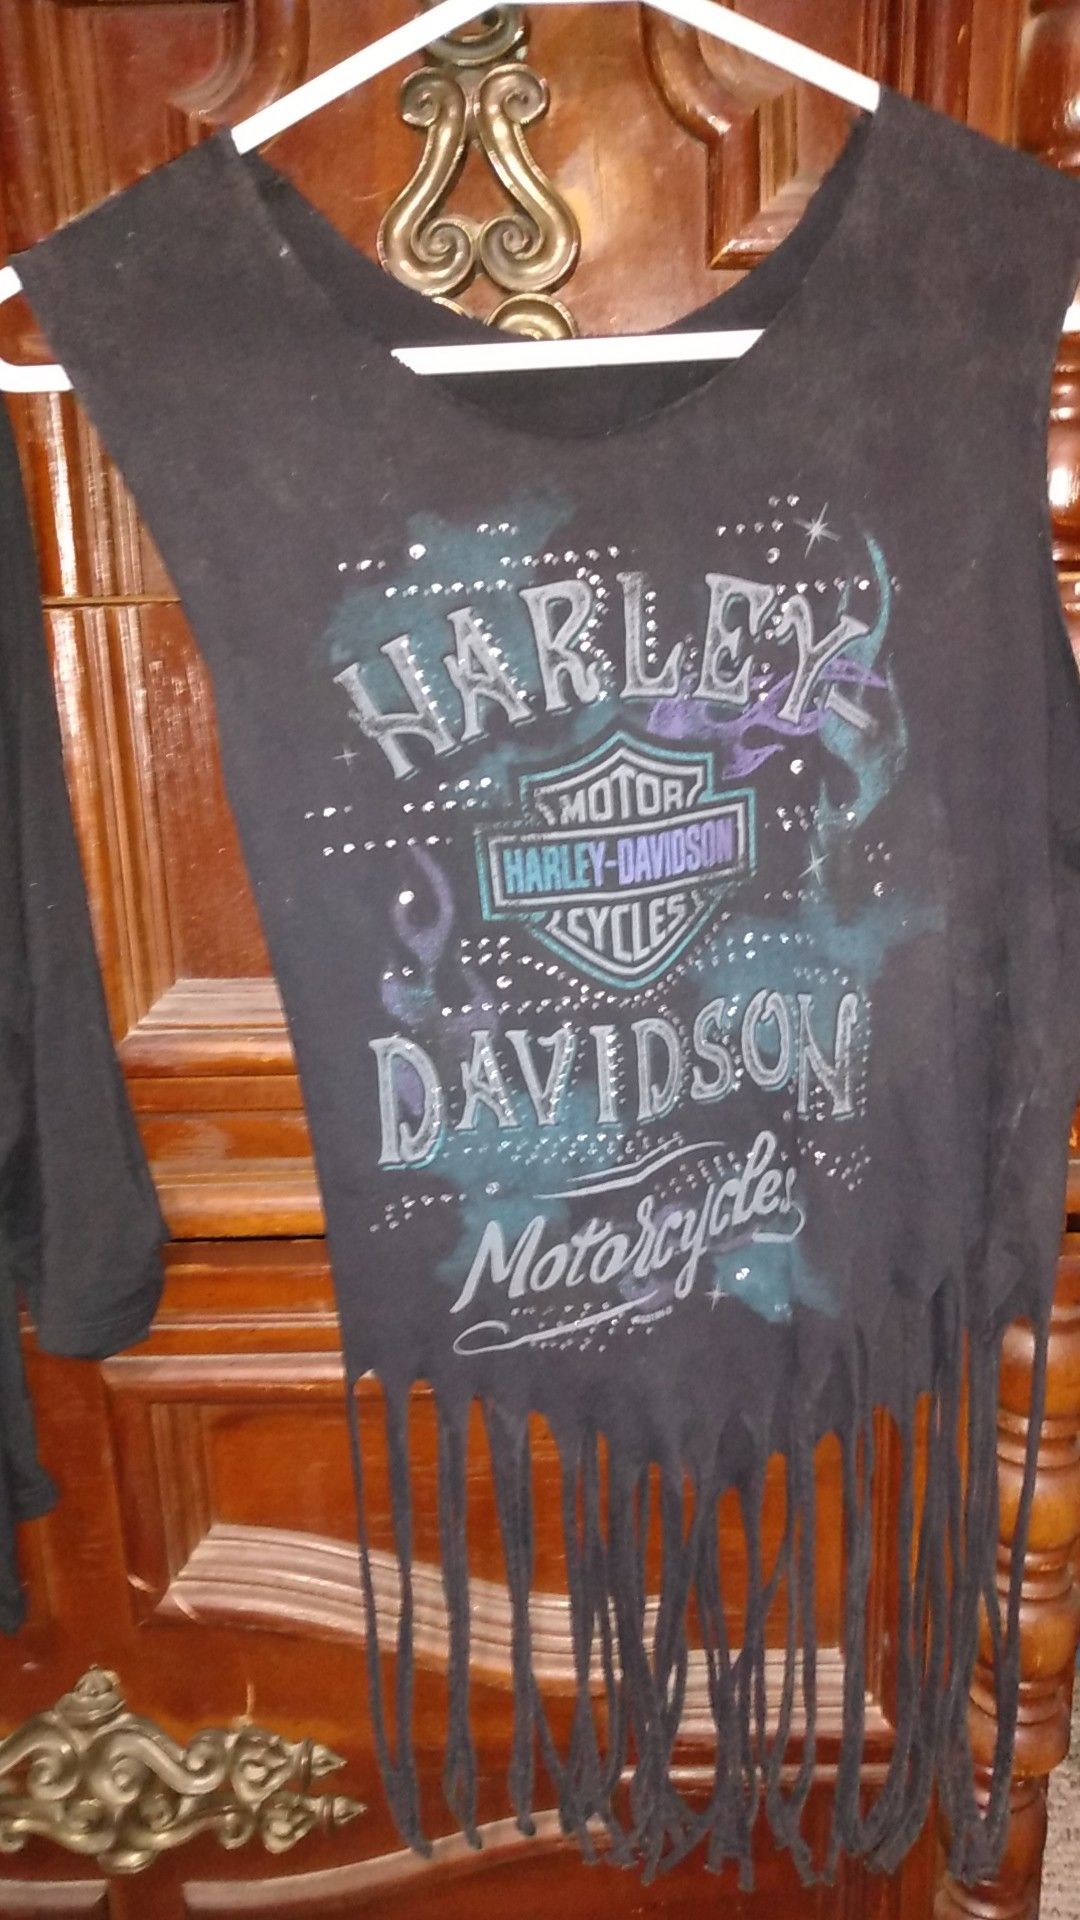 Harley Davidson shirts